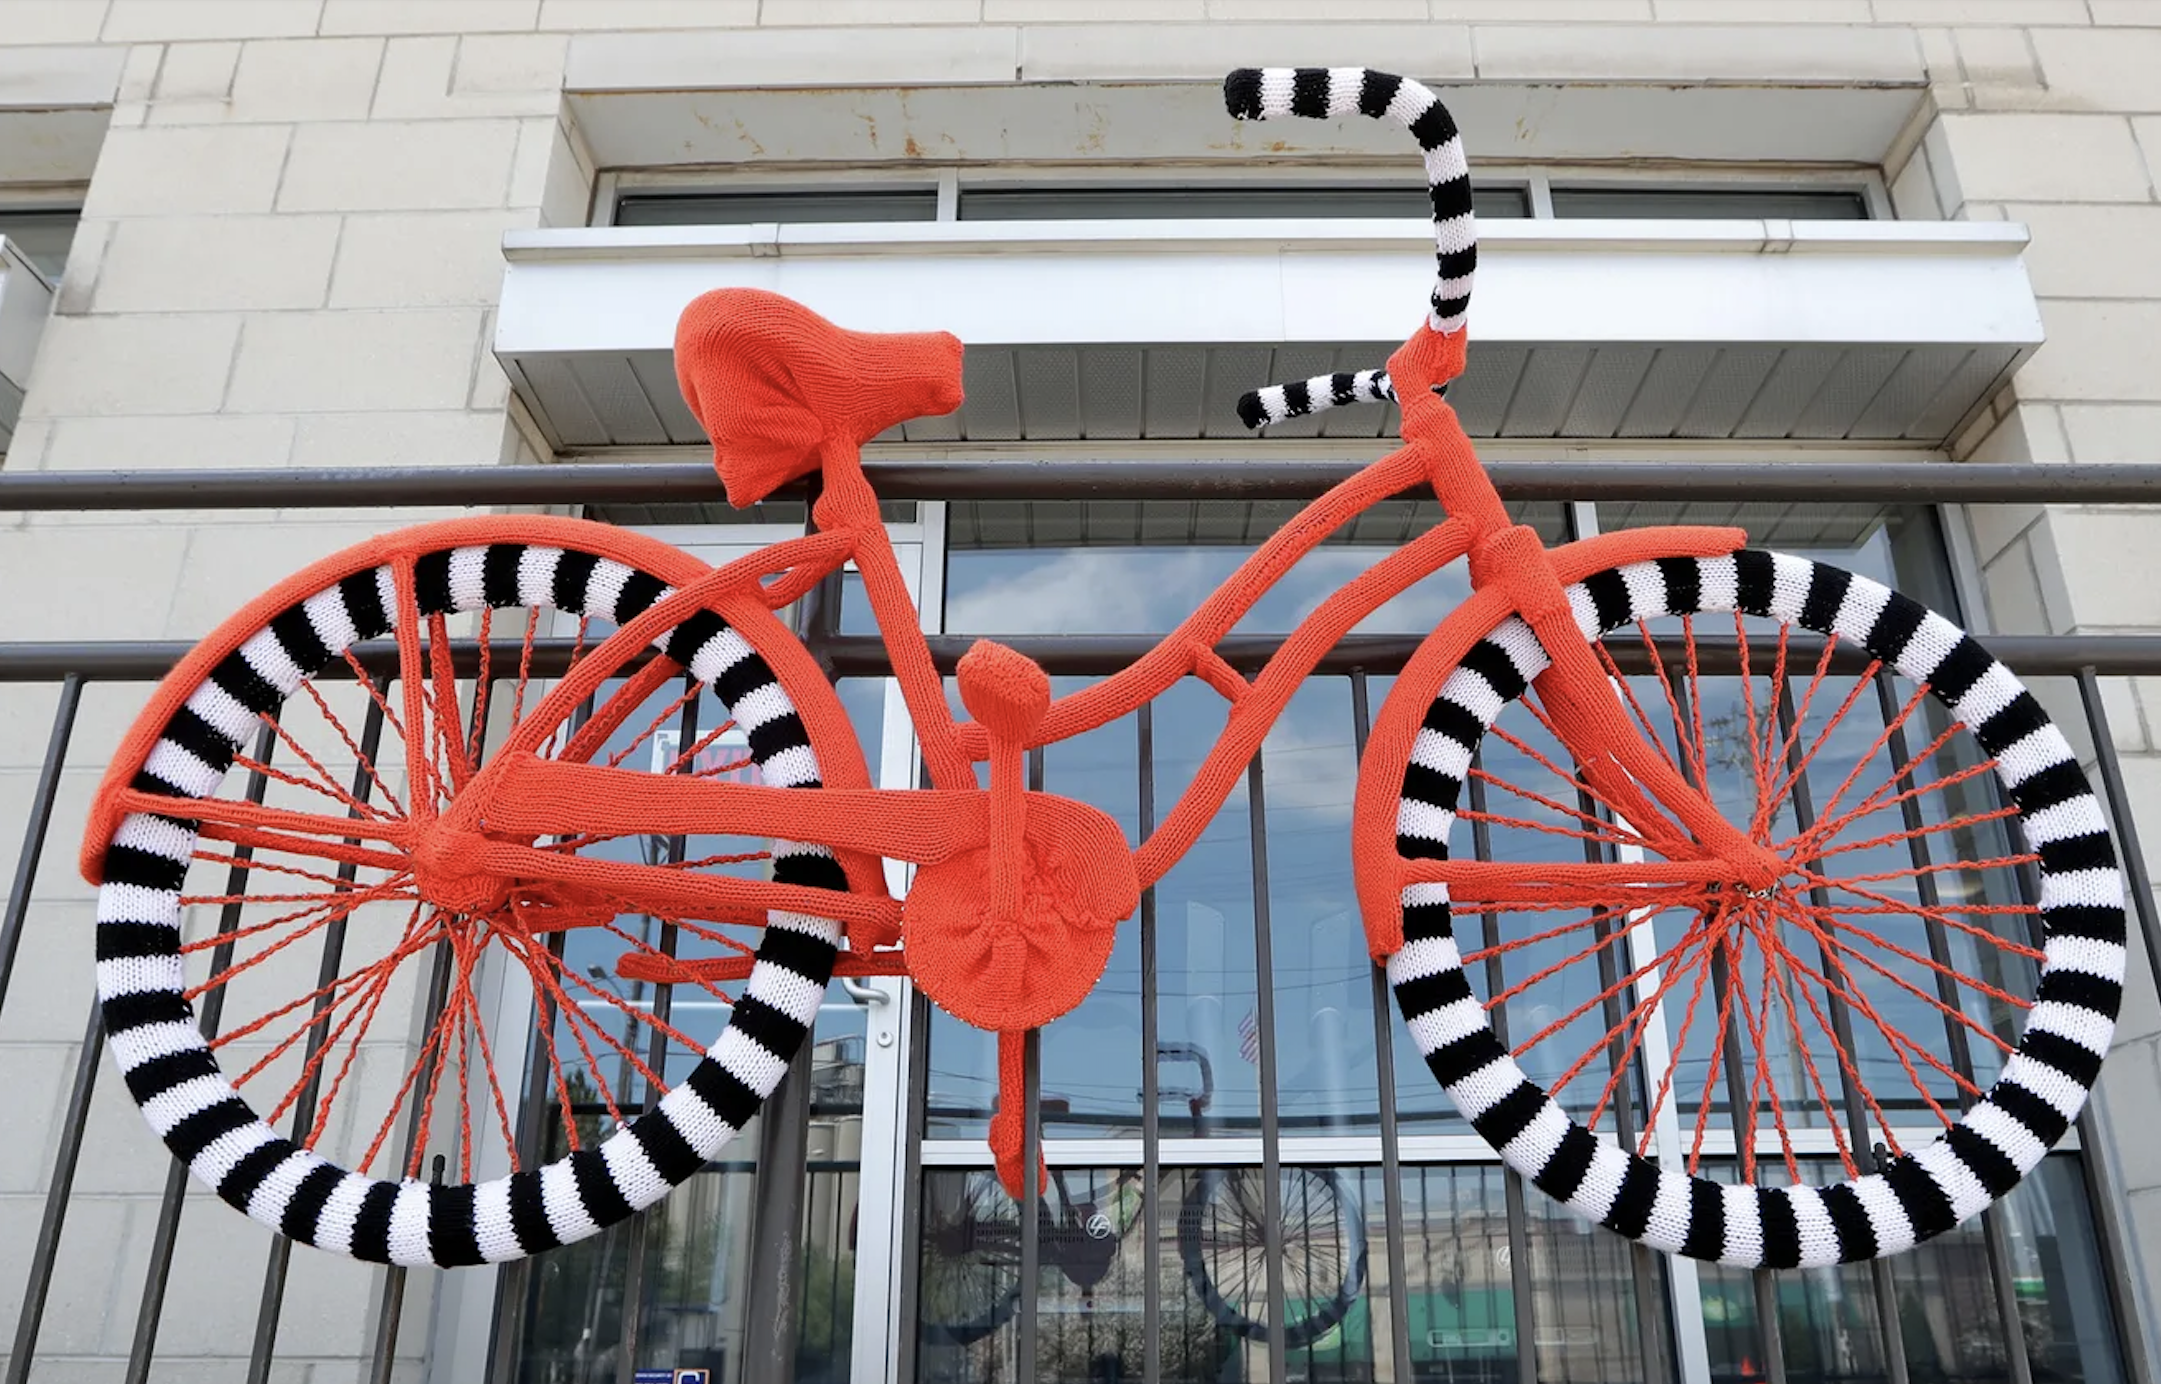 Knit-ical Mass: A Yarn-Bomb Bike Installation